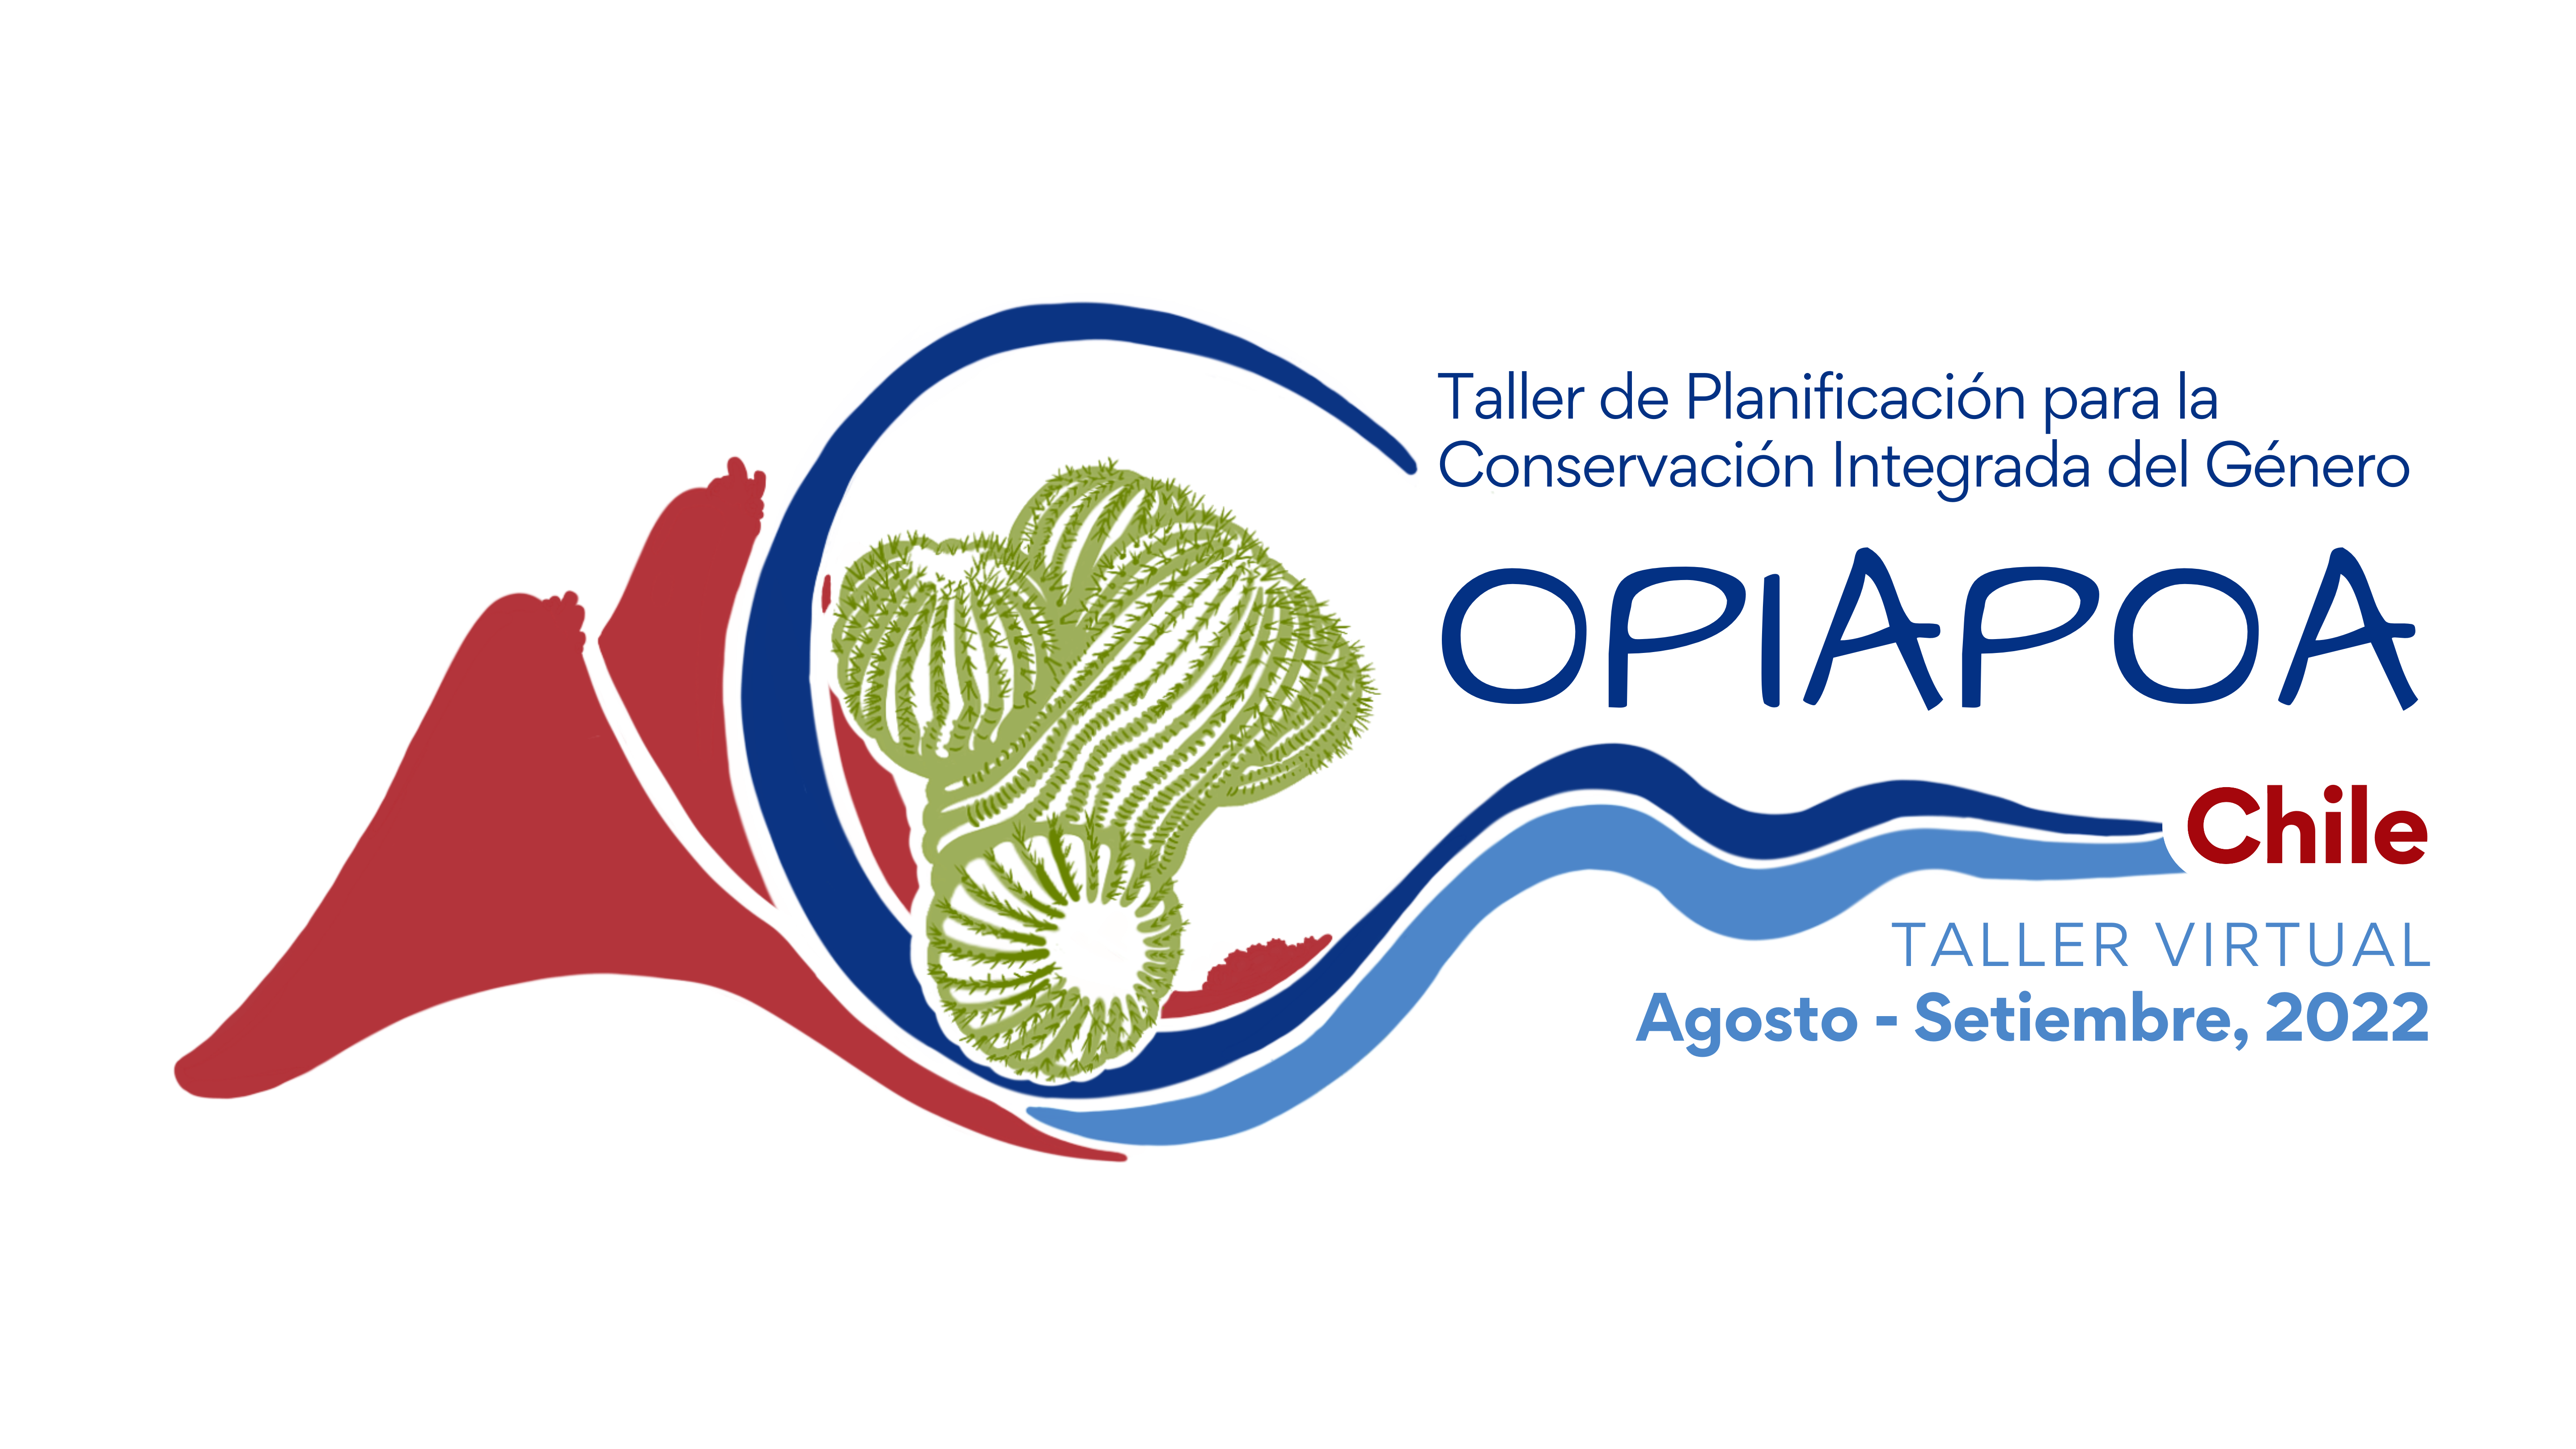 Integral conservation planning workshop for Copiapoa